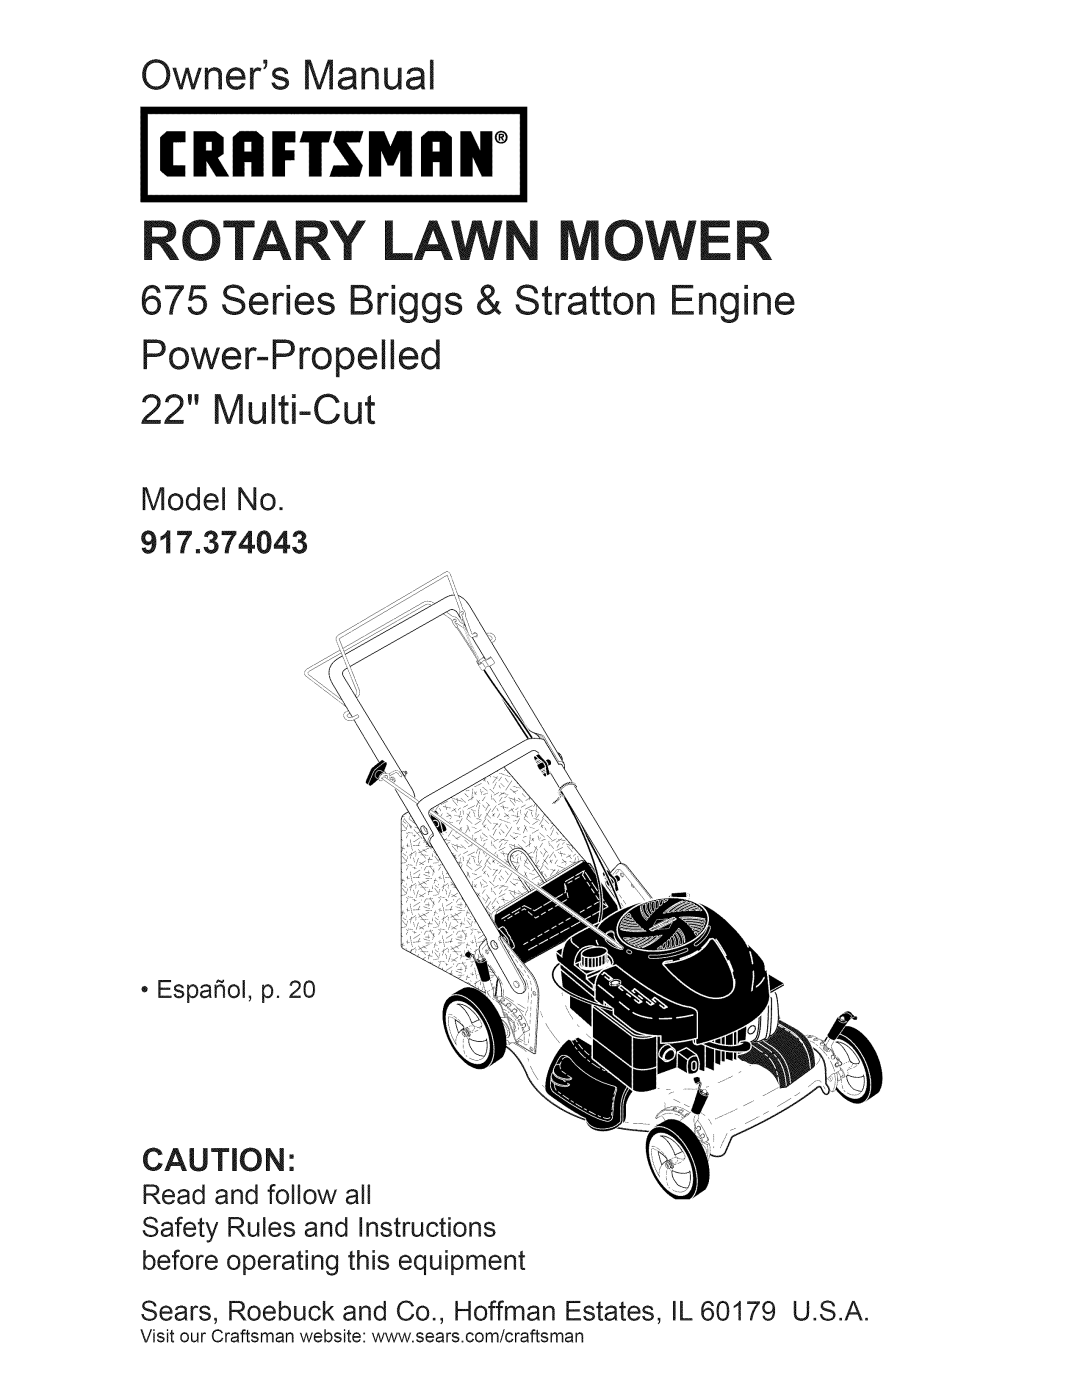 Craftsman owner manual Model No 917.374043, Craftsman, Rotary Lawn Mower, Series Briggs & Stratton Engine 